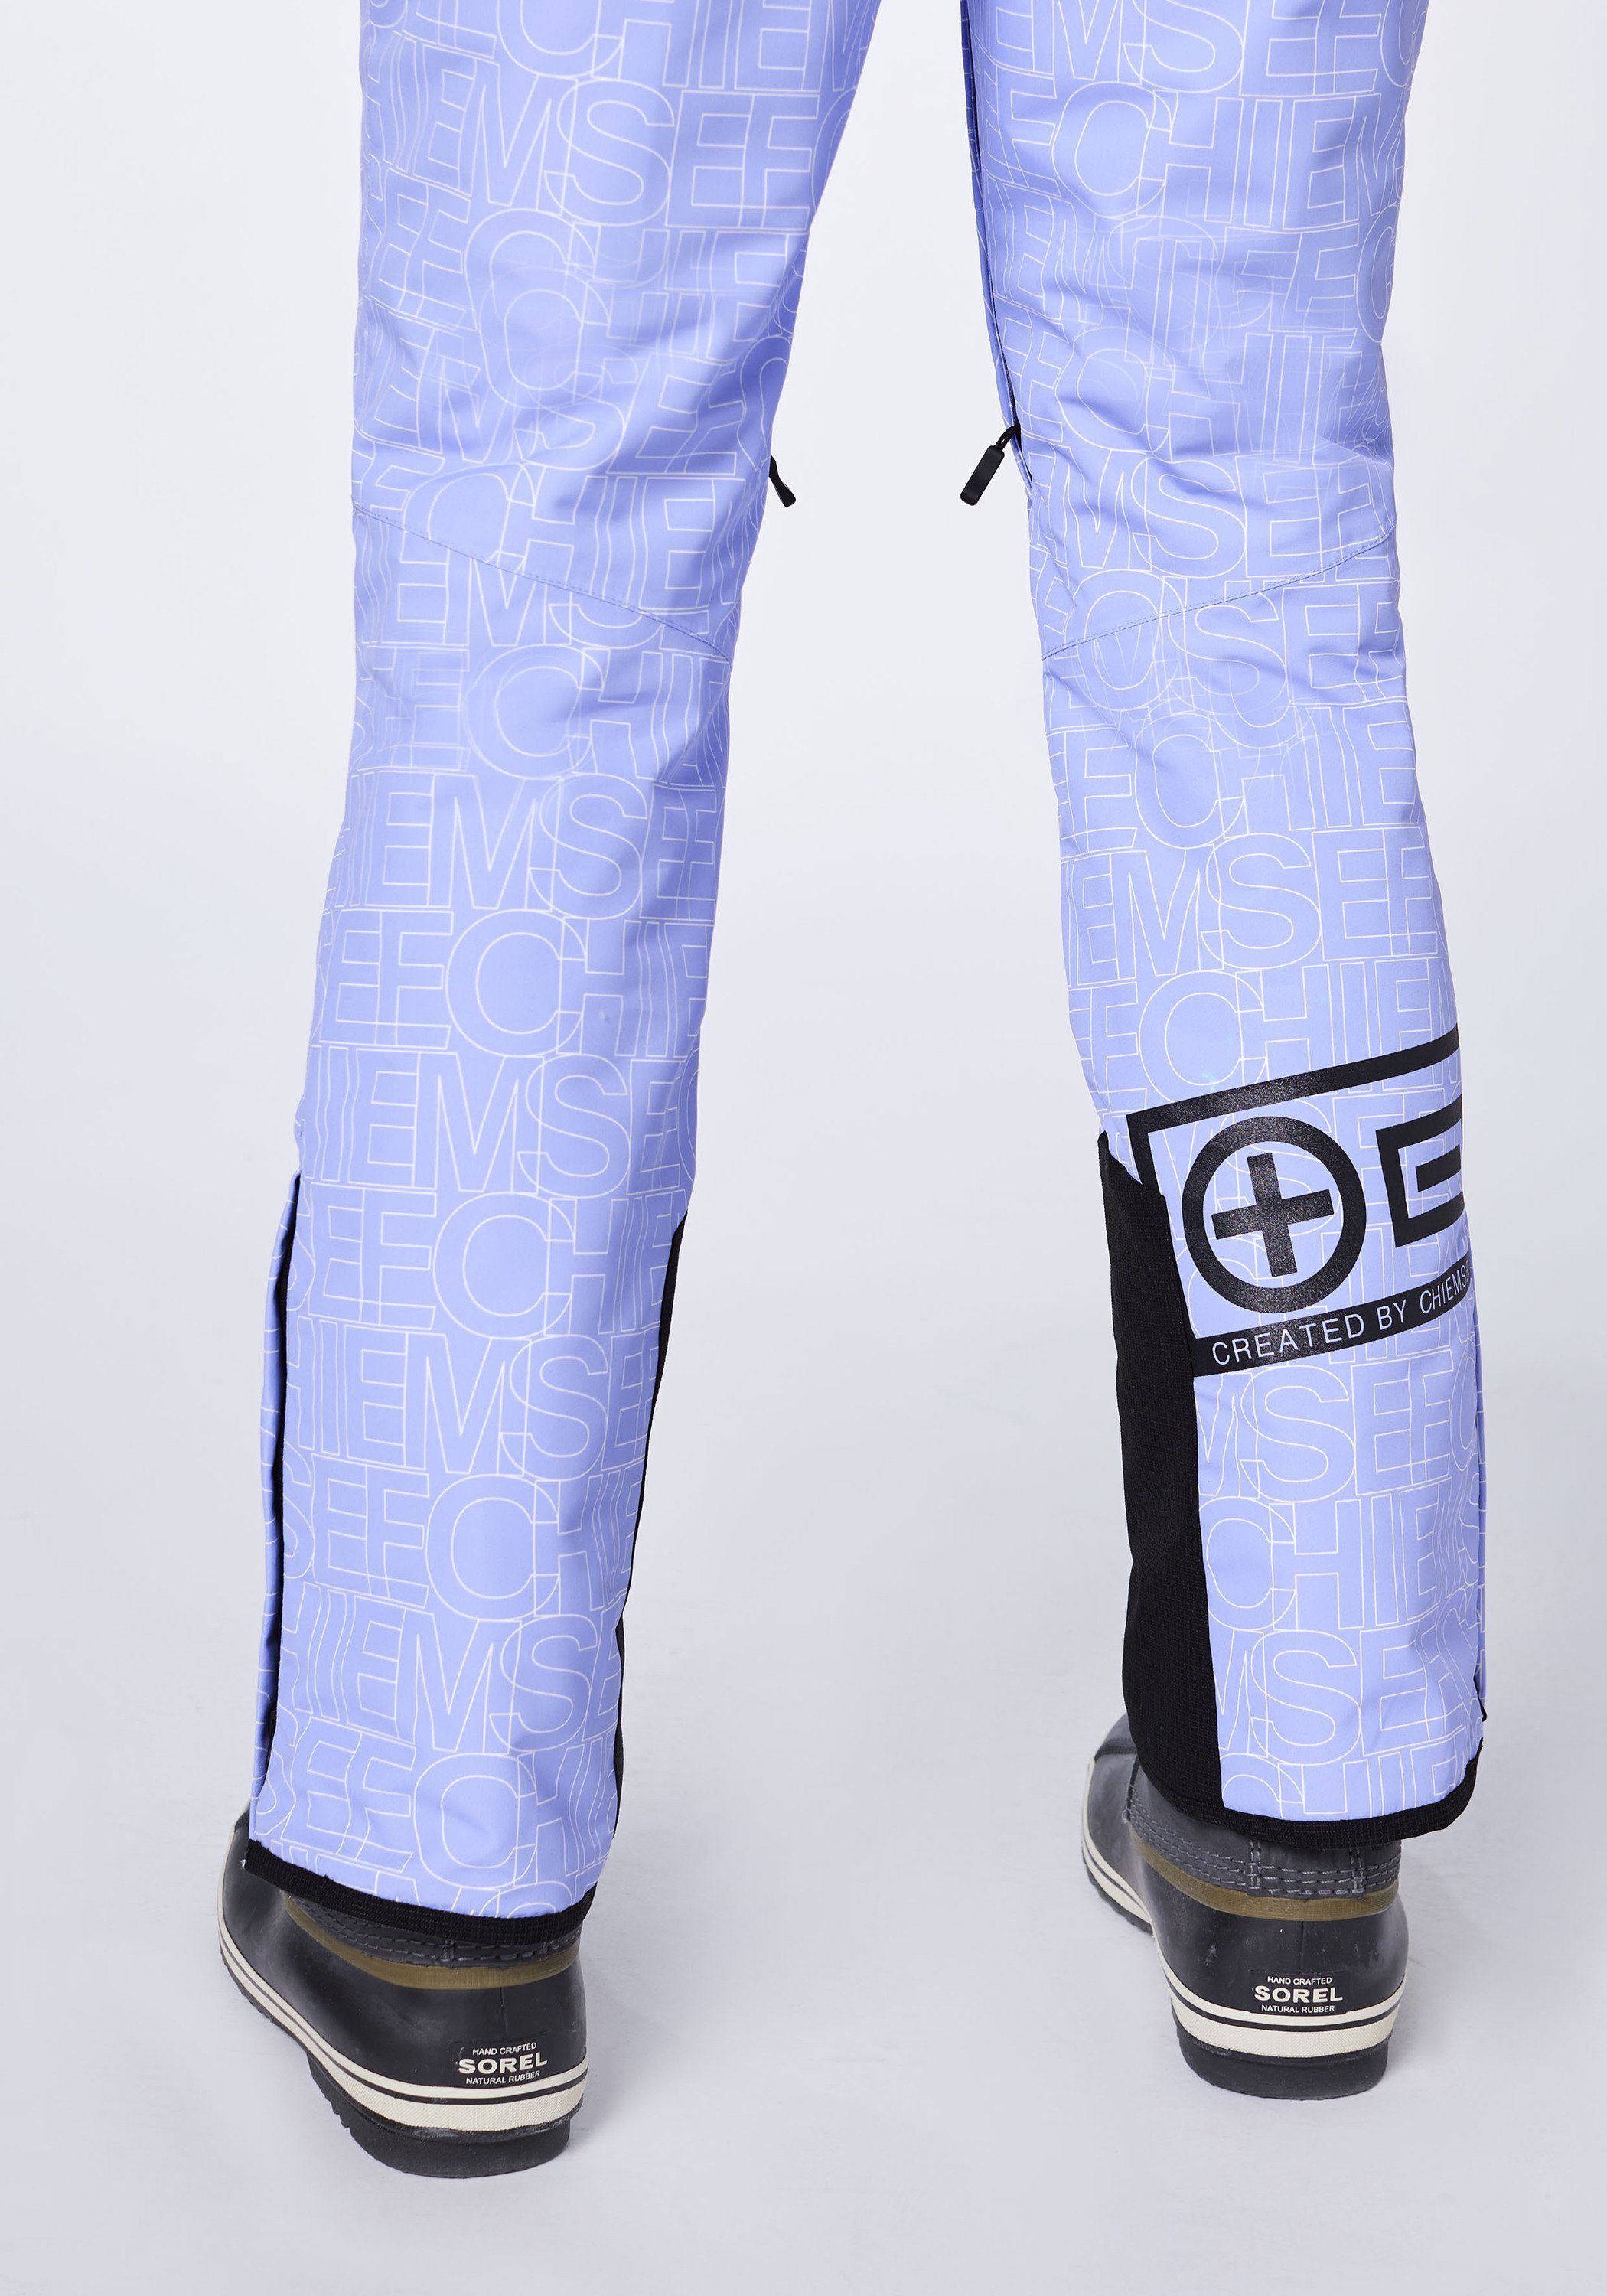 Chiemsee Sporthose Slim-Fit Blue/White Skihose mit Medium Allover-Muster 1